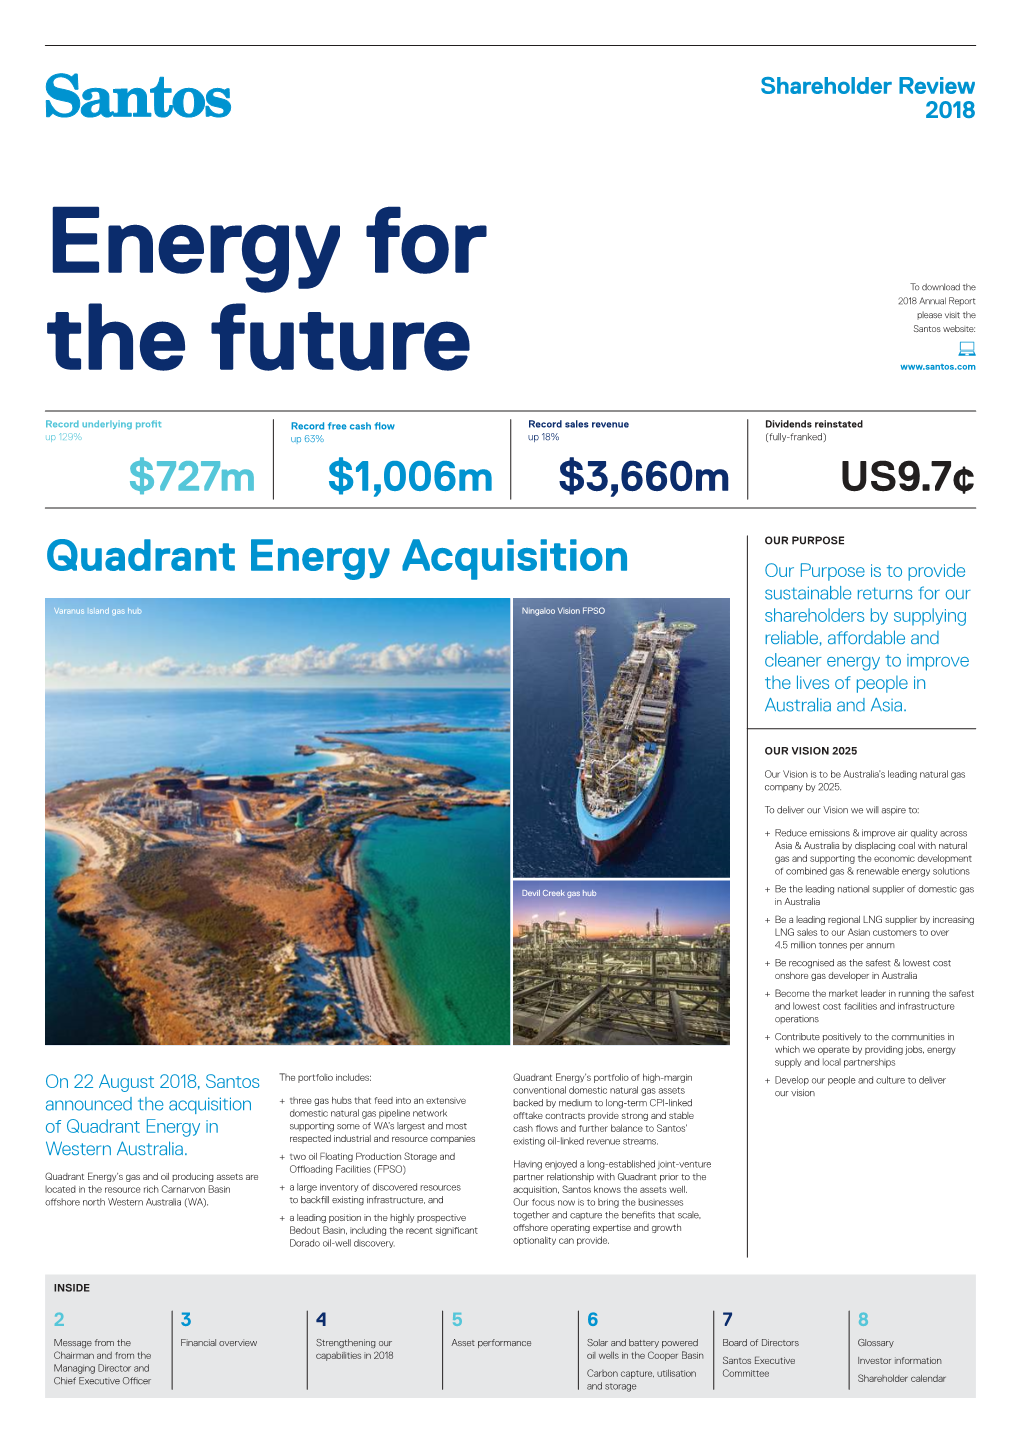 Quadrant Energy Acquisition